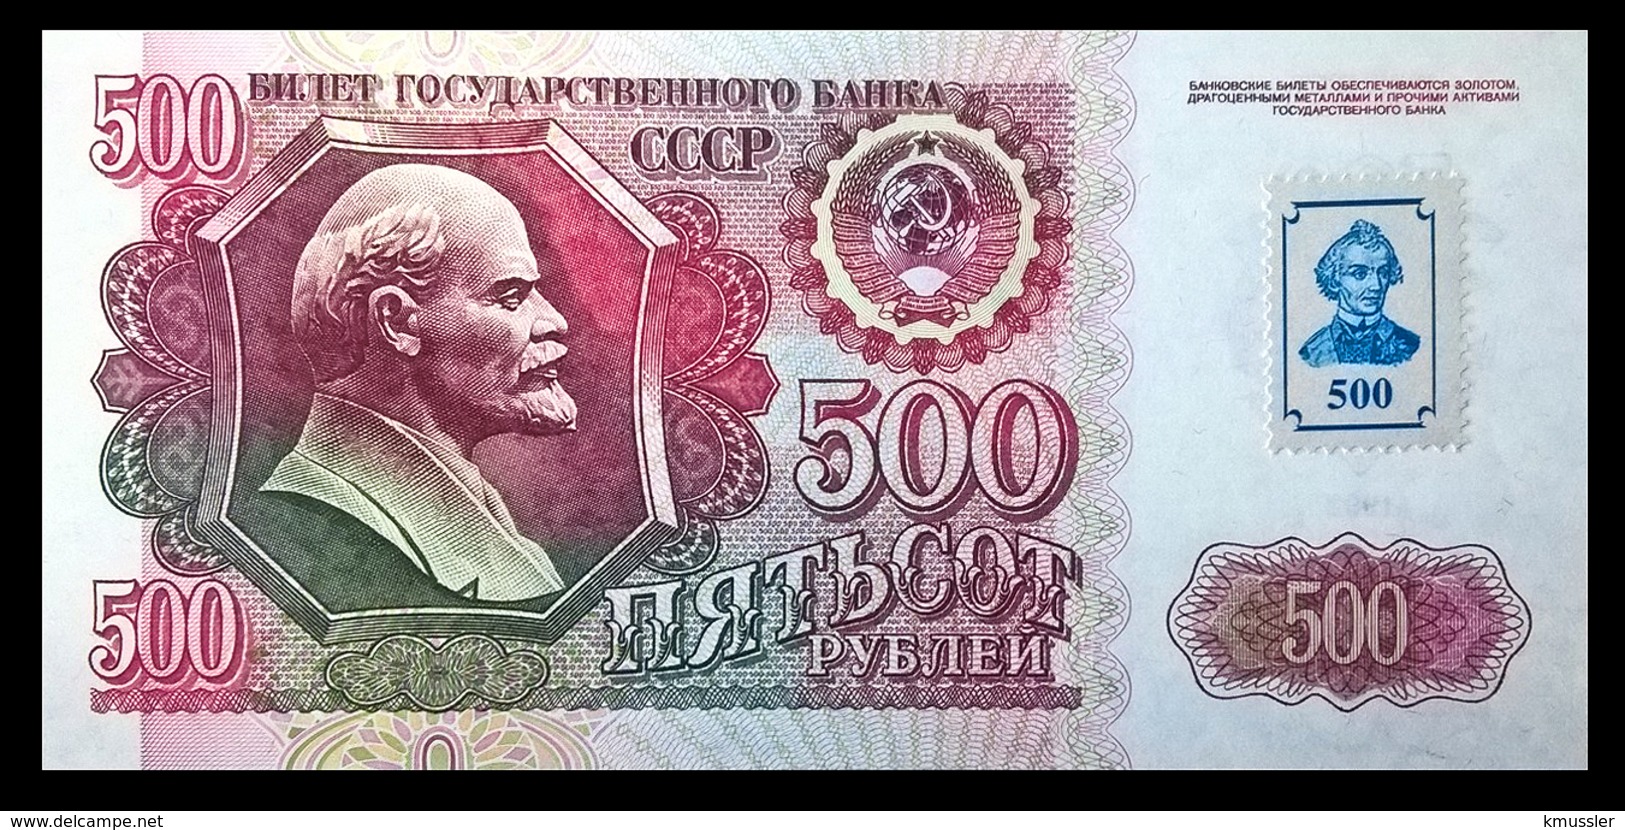 # # # Banknote Transnistrien (Transnistria) 500 Rubel UNC # # # - Russland